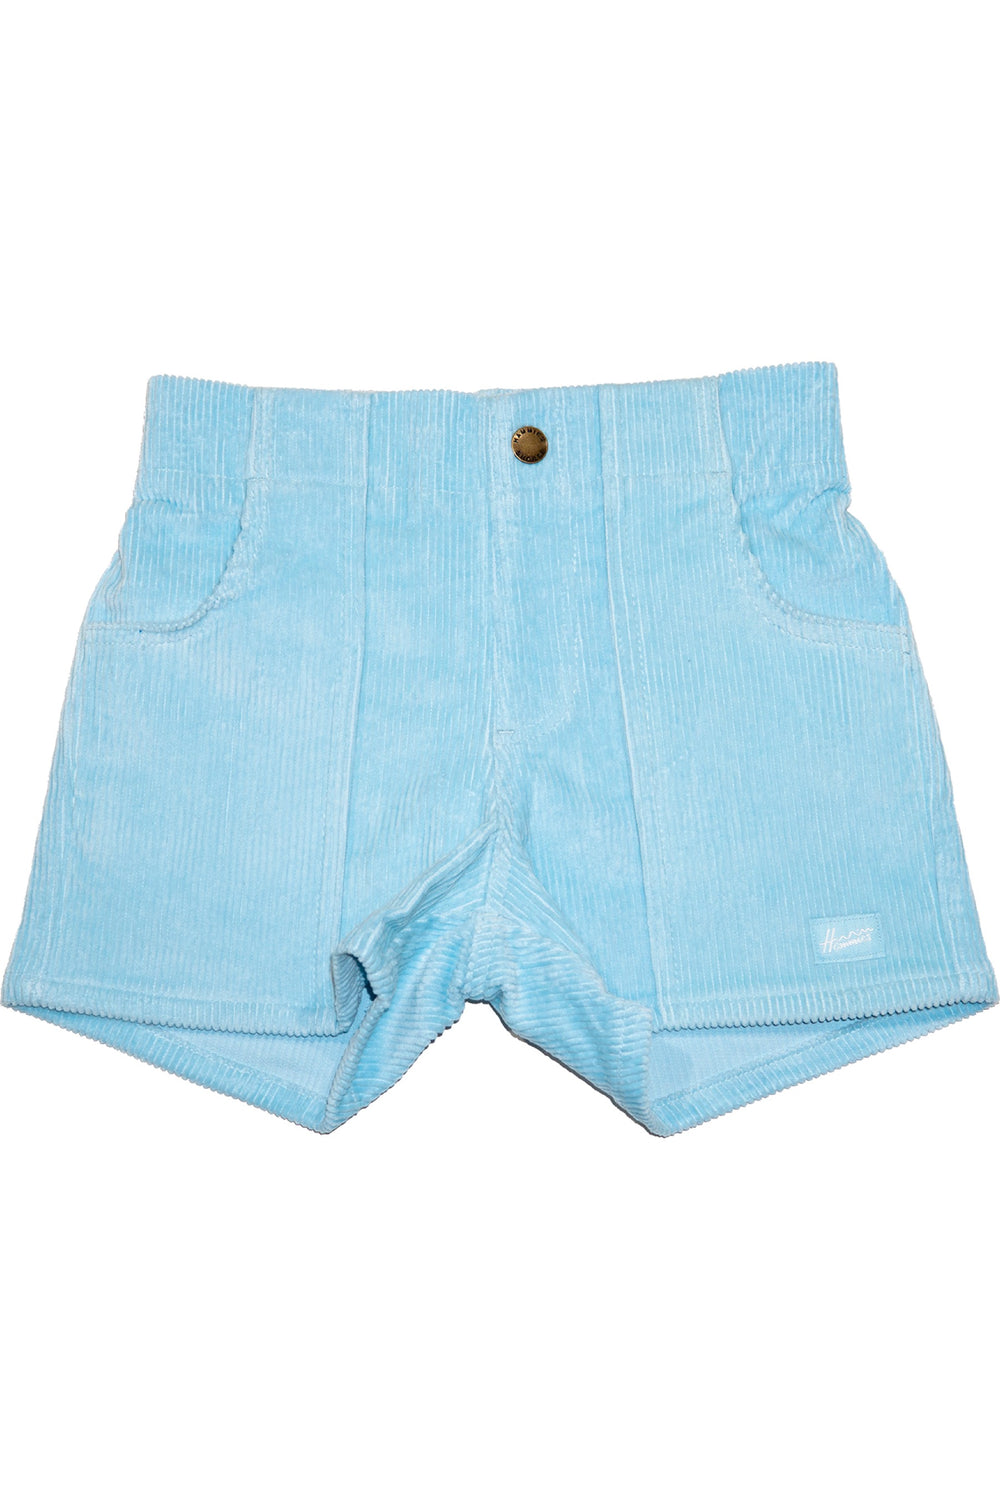 Powder Blue Hammies Shorts